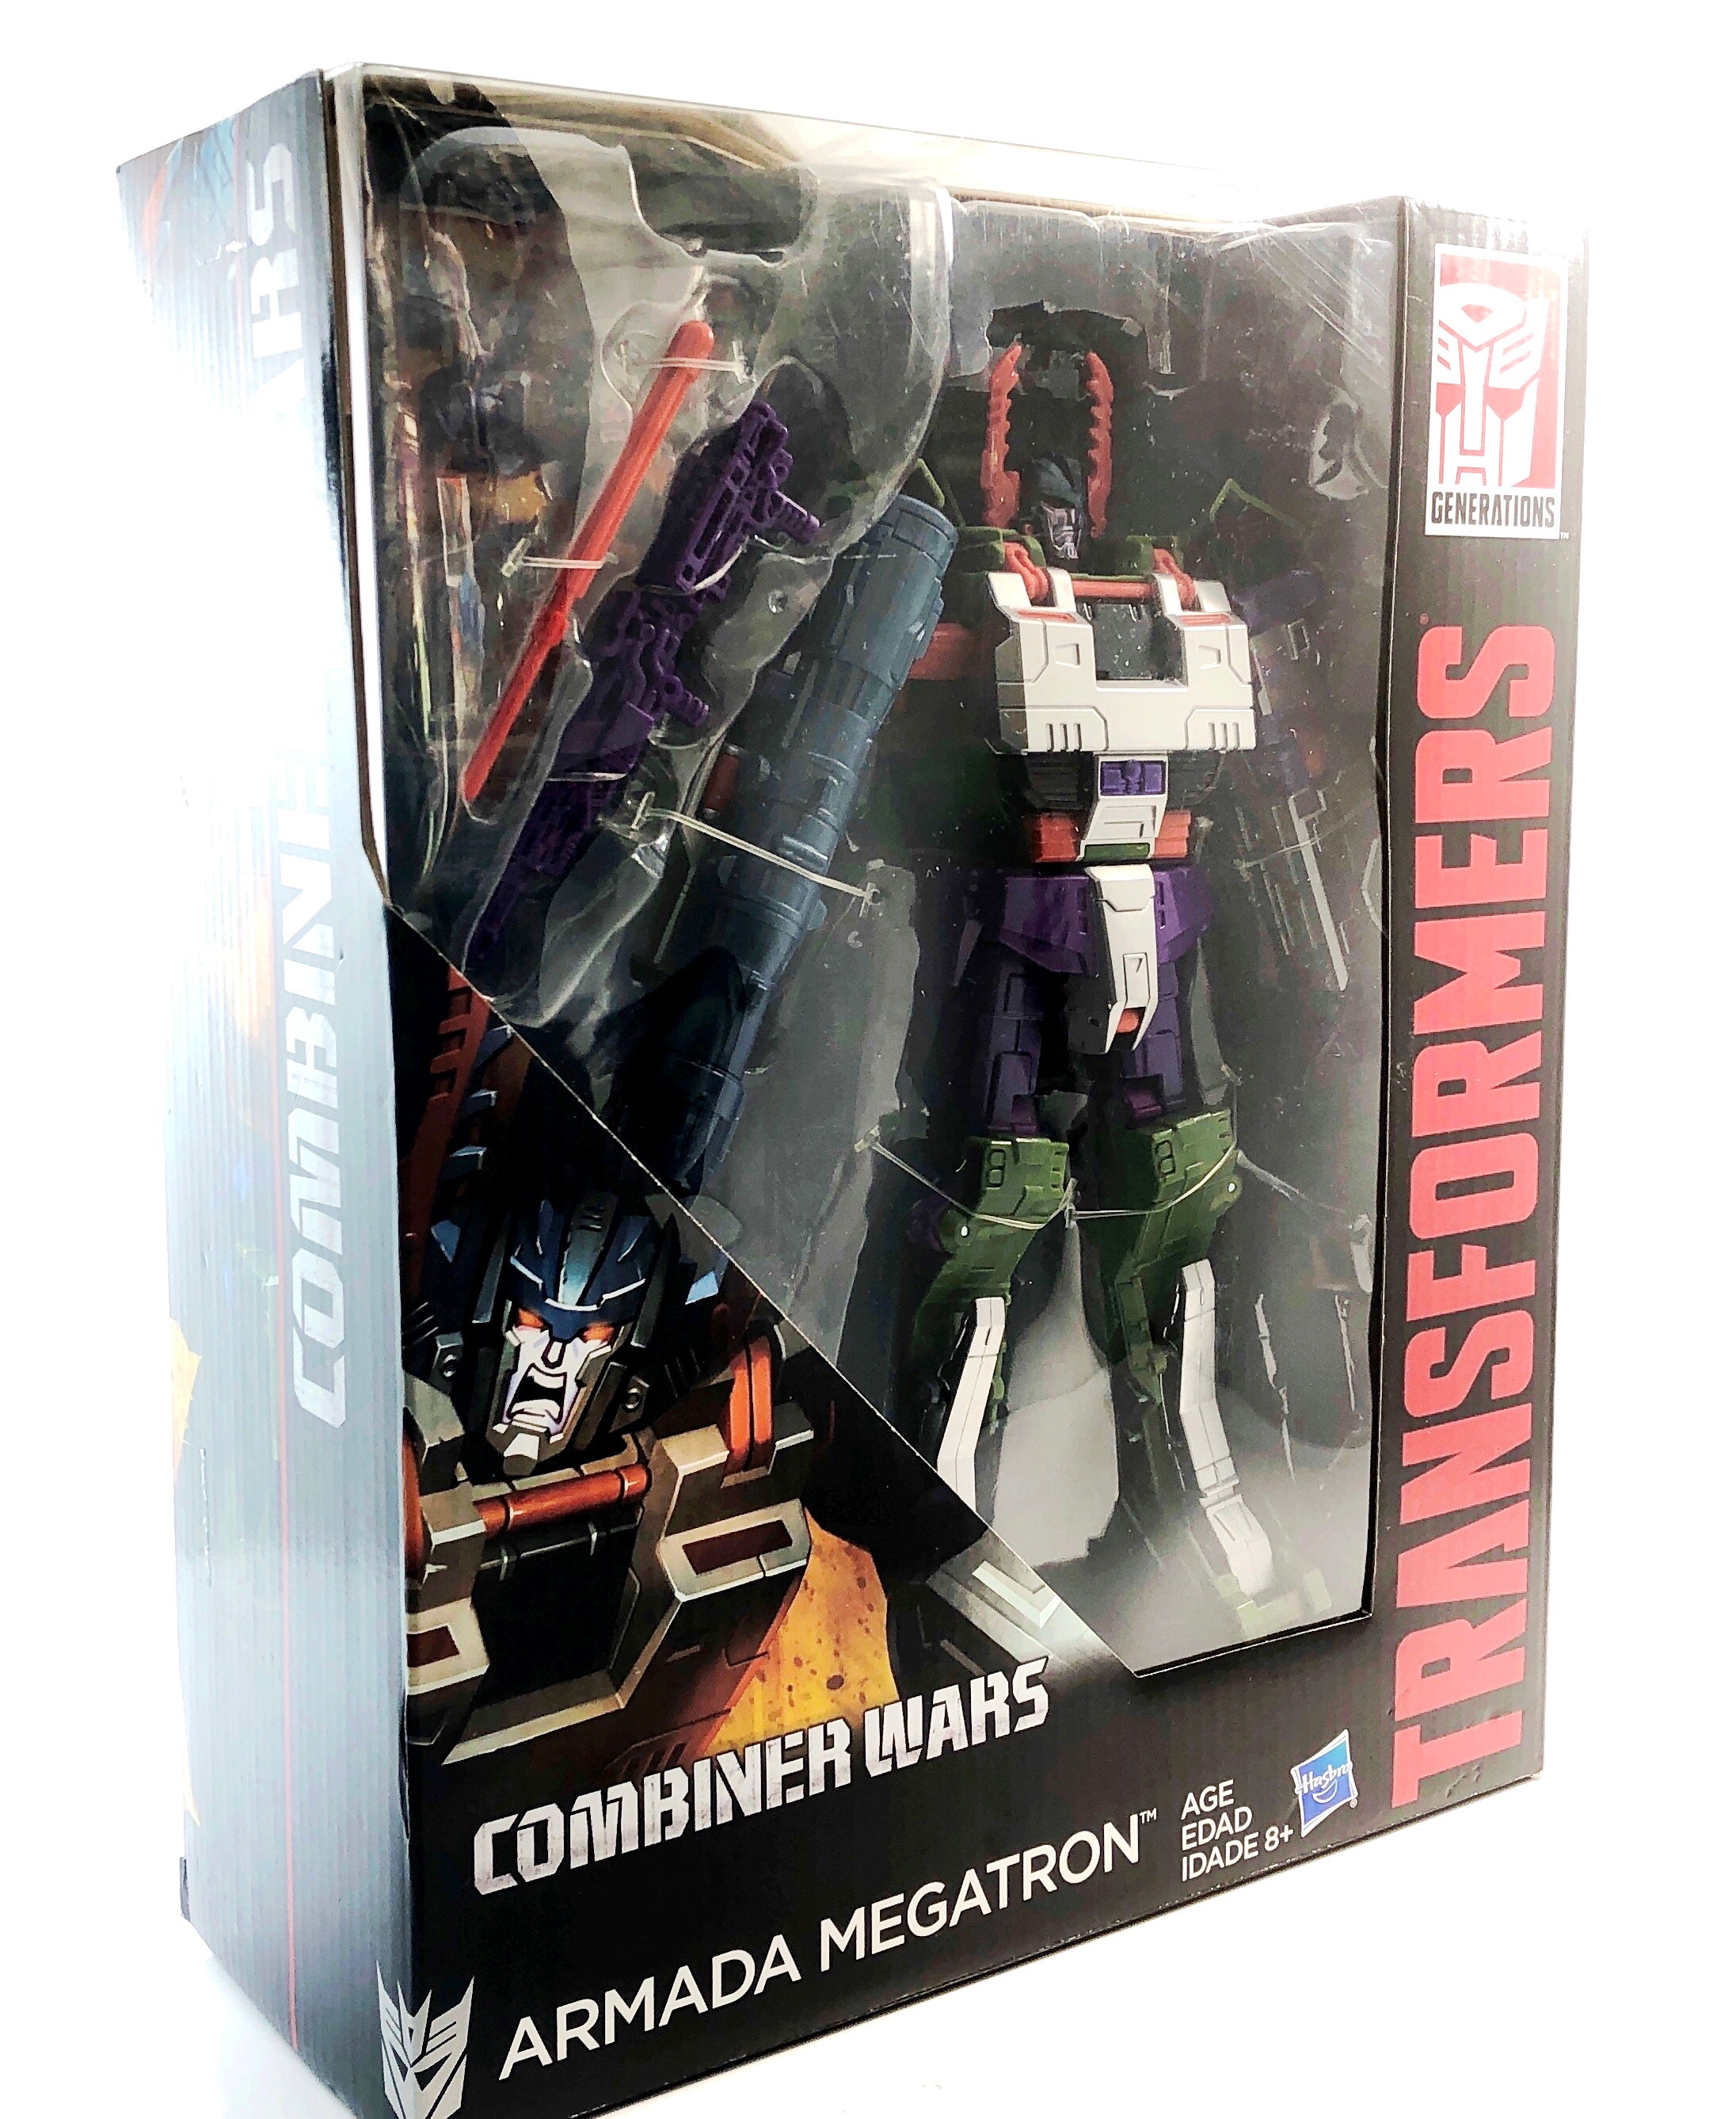 Transformers Combiner Wars: Leaderclass Armada Megatron